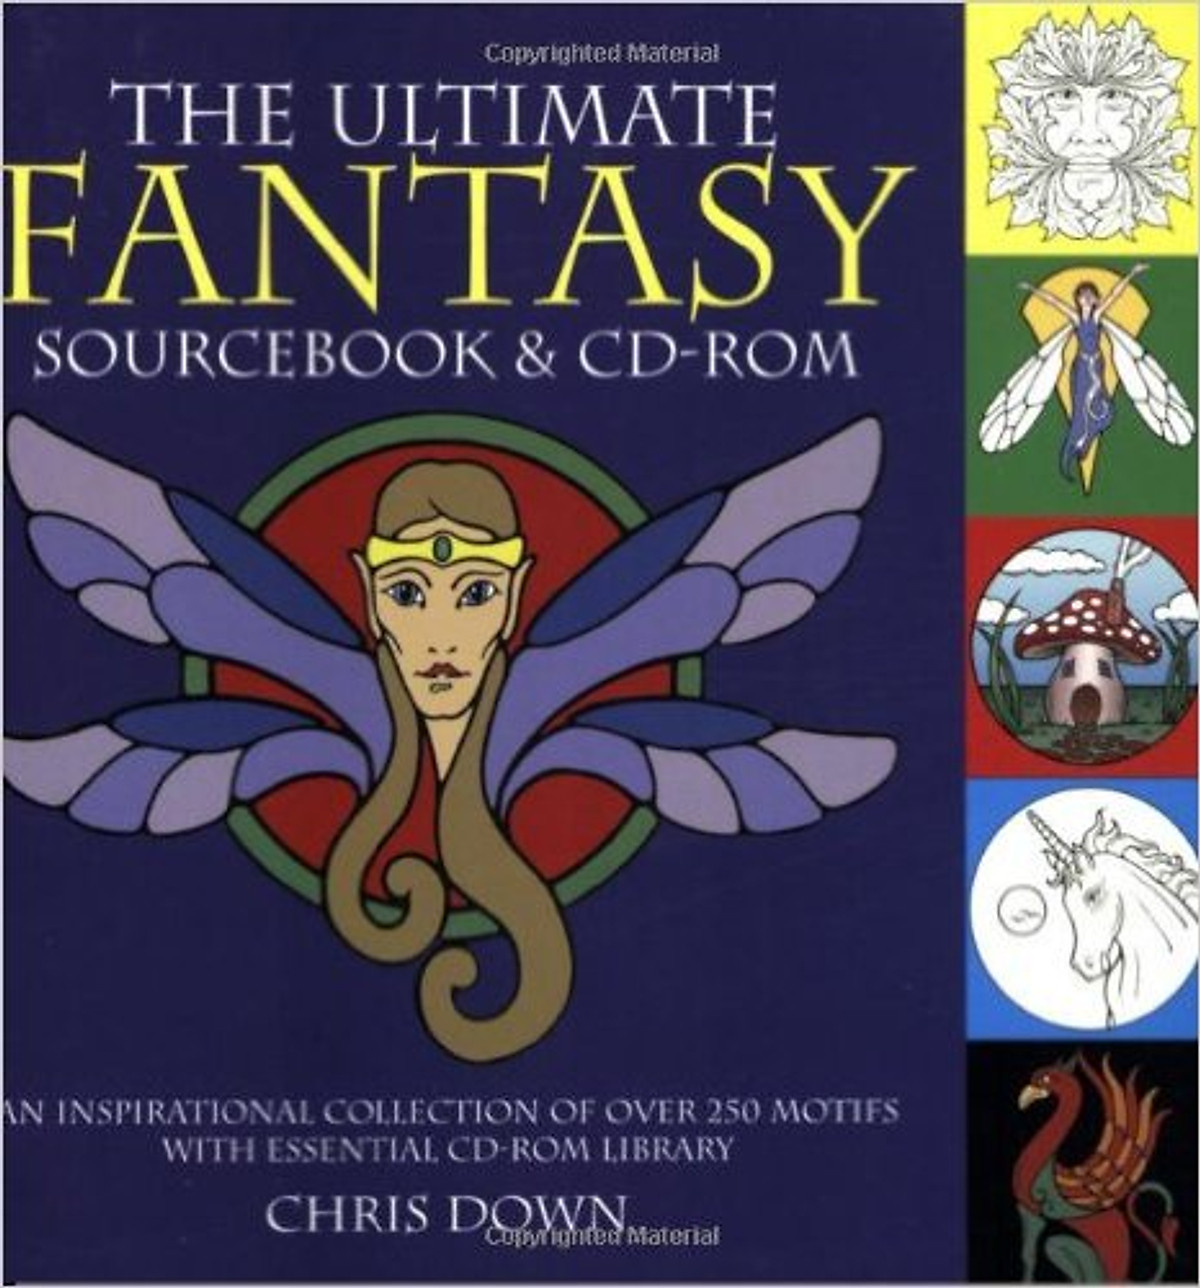 The Ultimate Fantasy Sourcebook